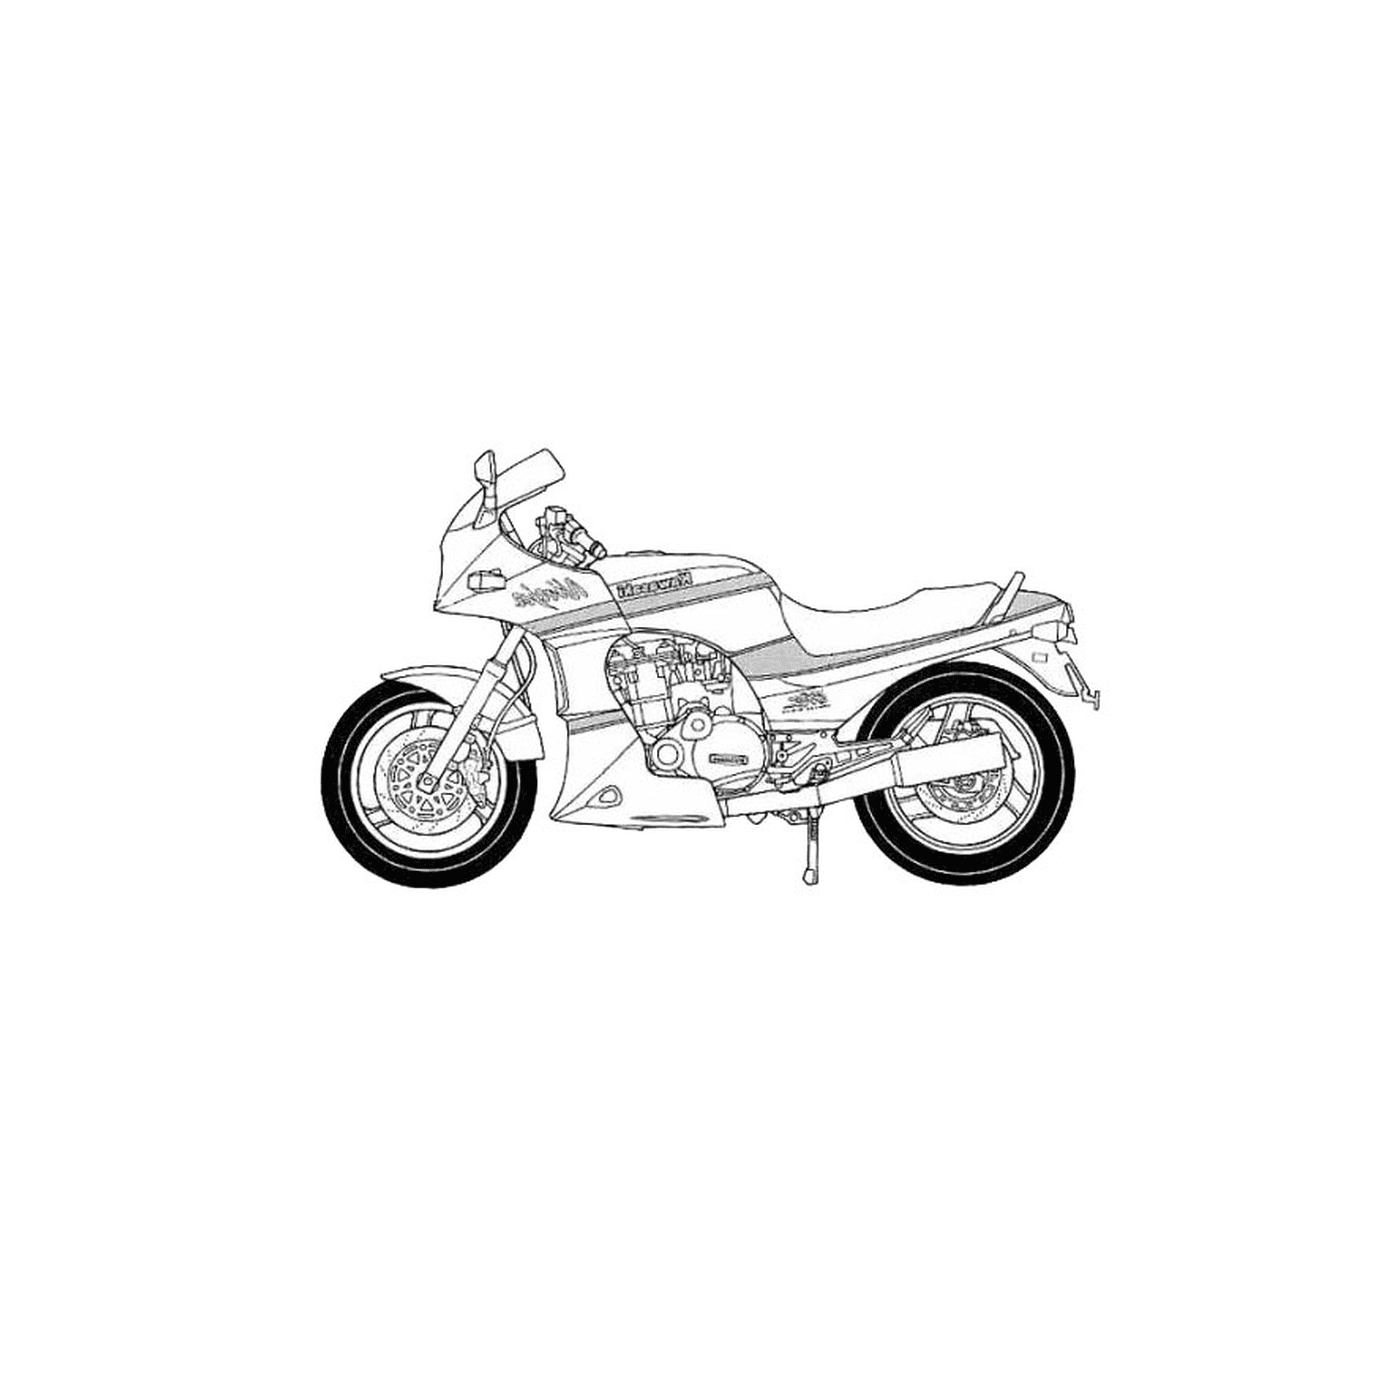  Kawasaki motorcycle on white background 